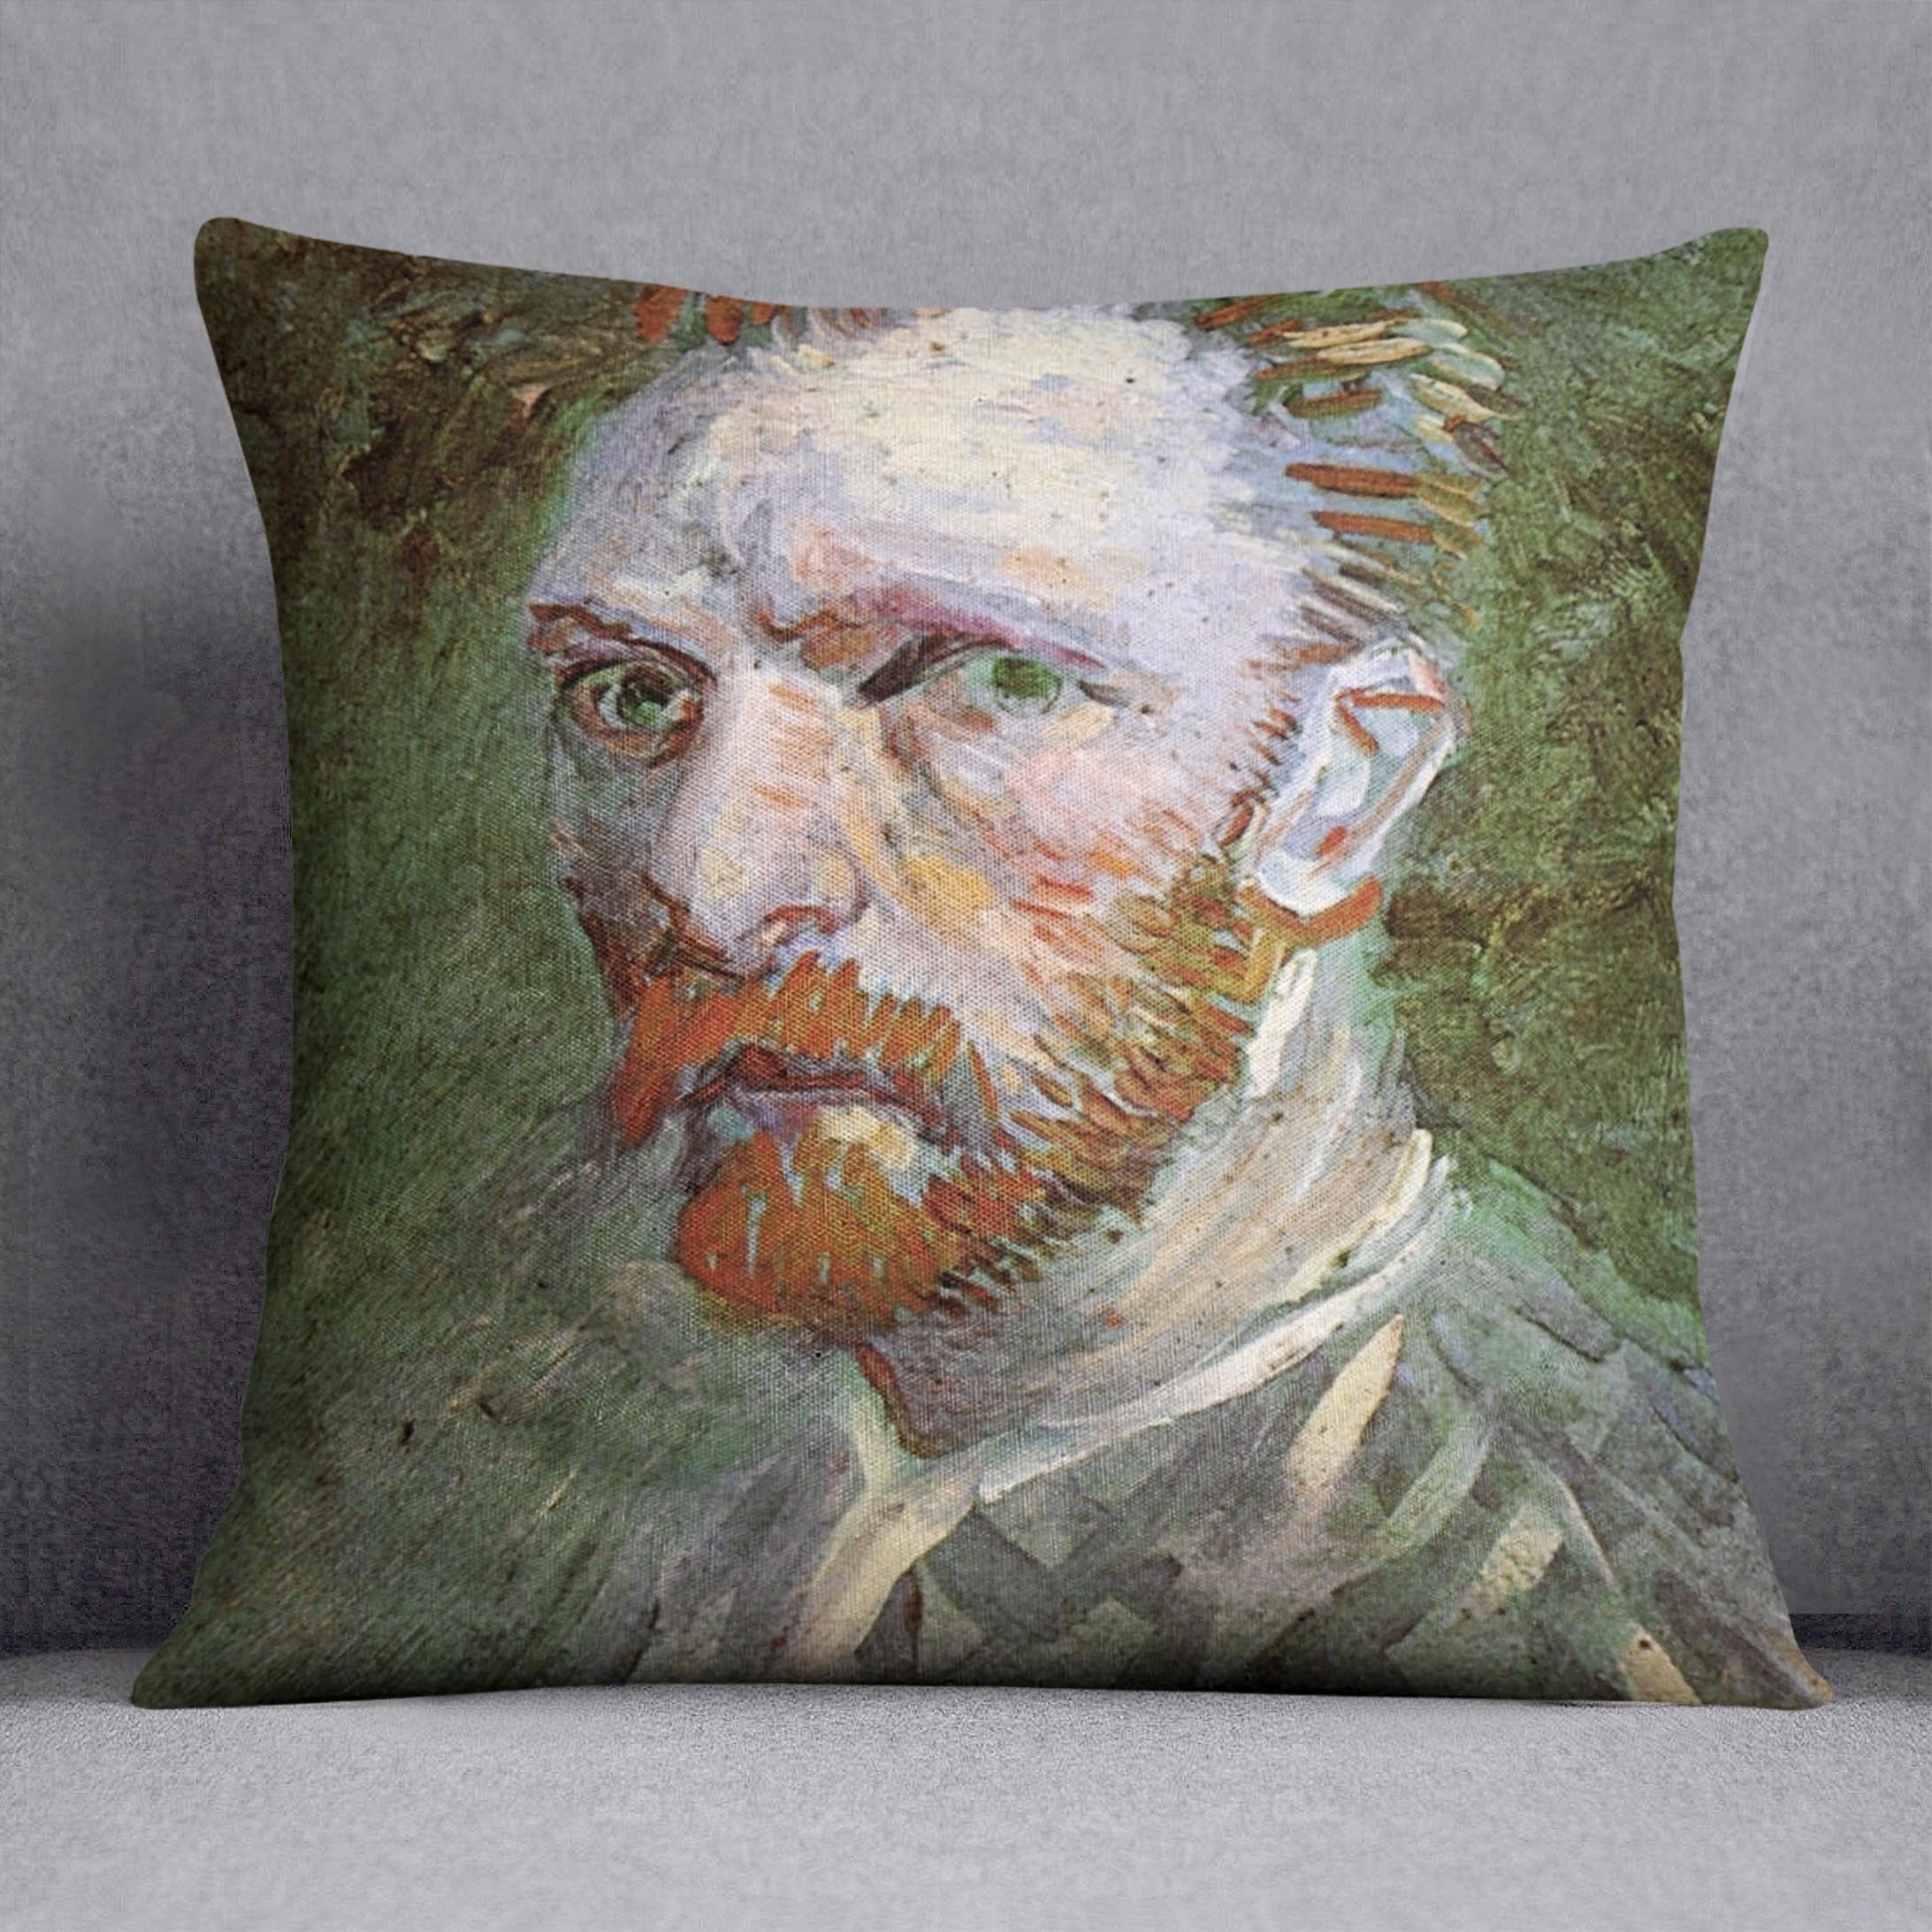 Self-Portrait 4 by Van Gogh Throw Pillow